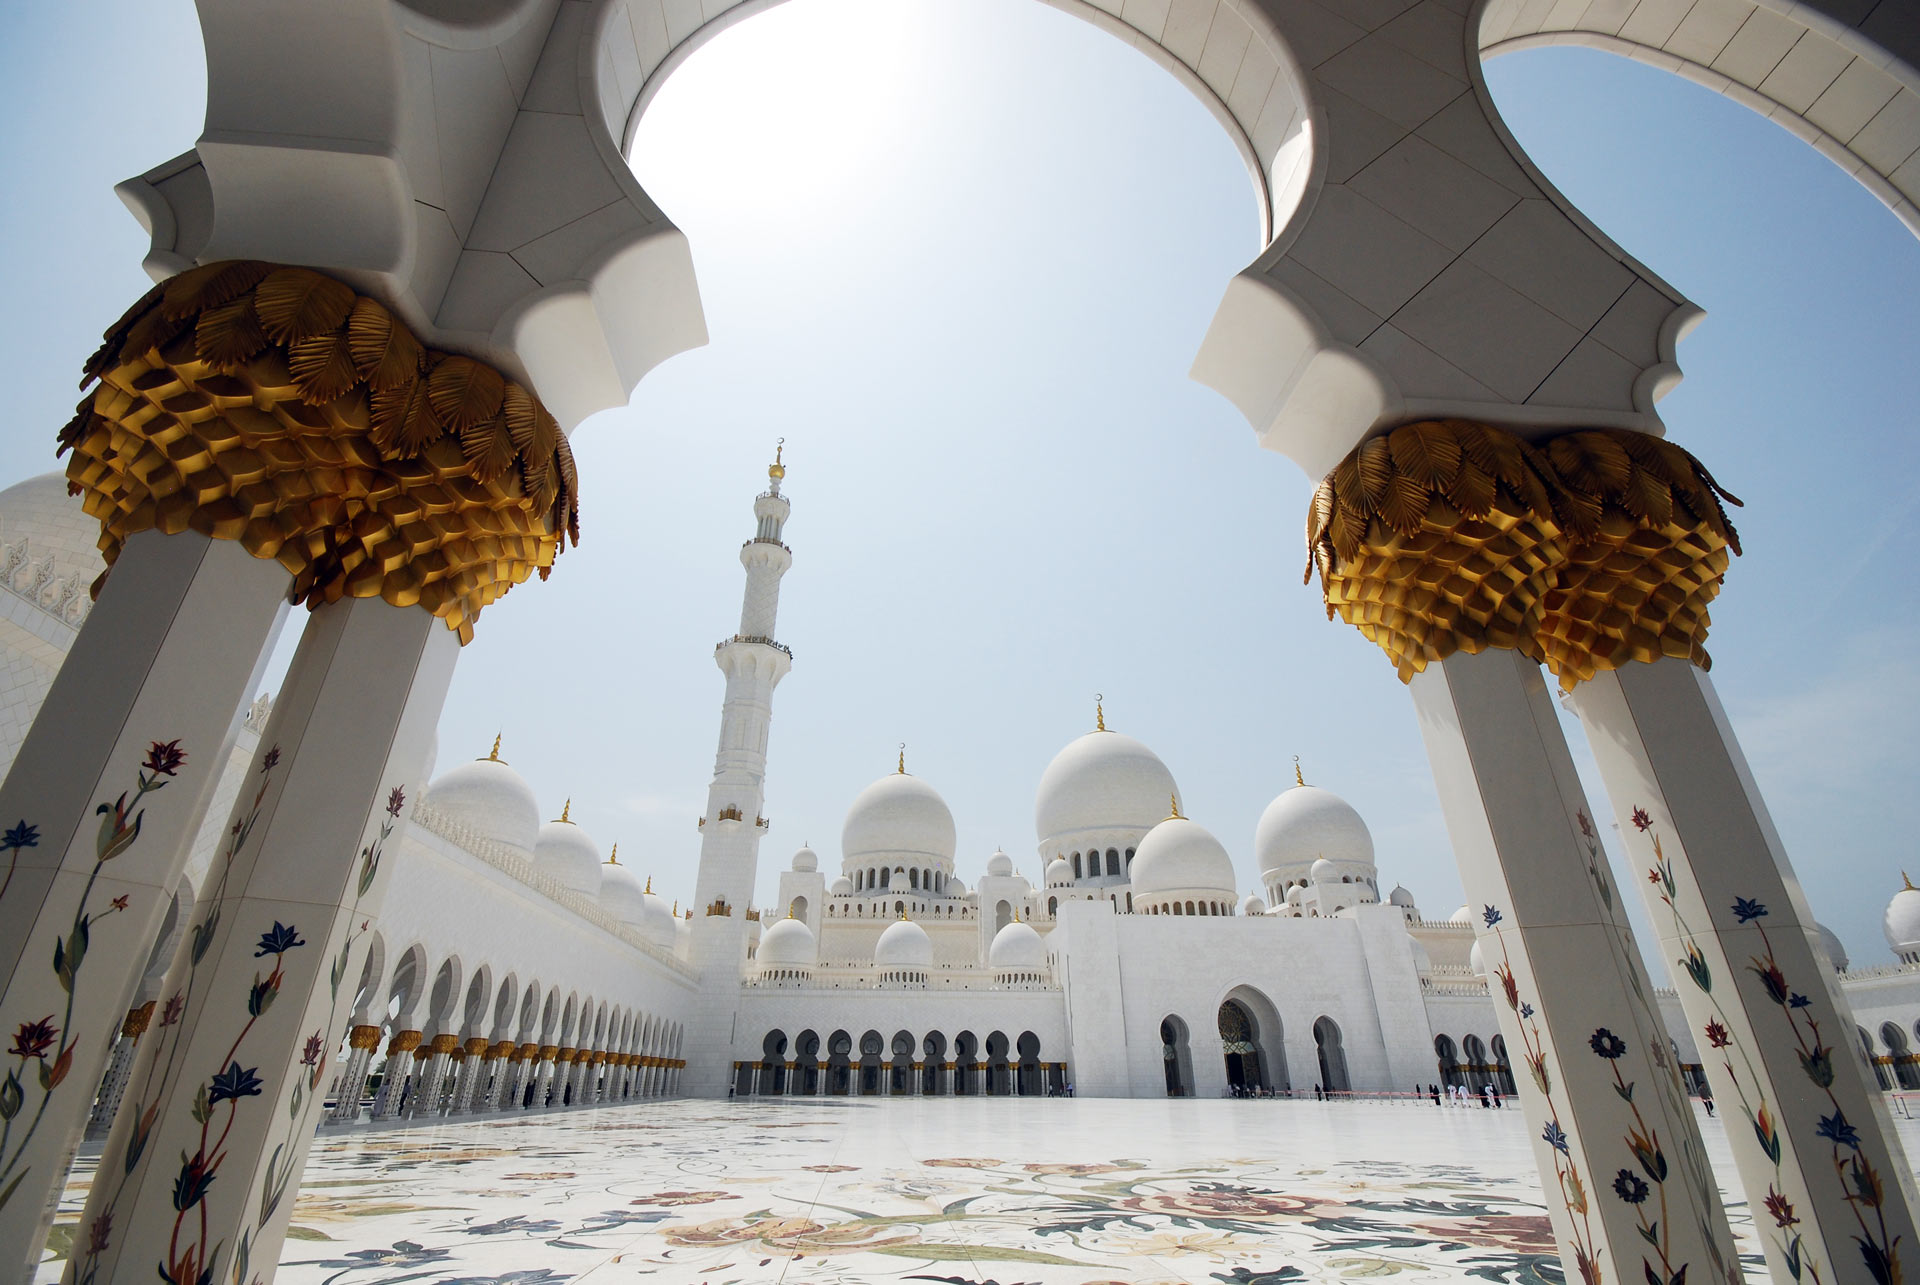 Sheikh Zayed Grand Mosque in Abu Dhabi (UAE)